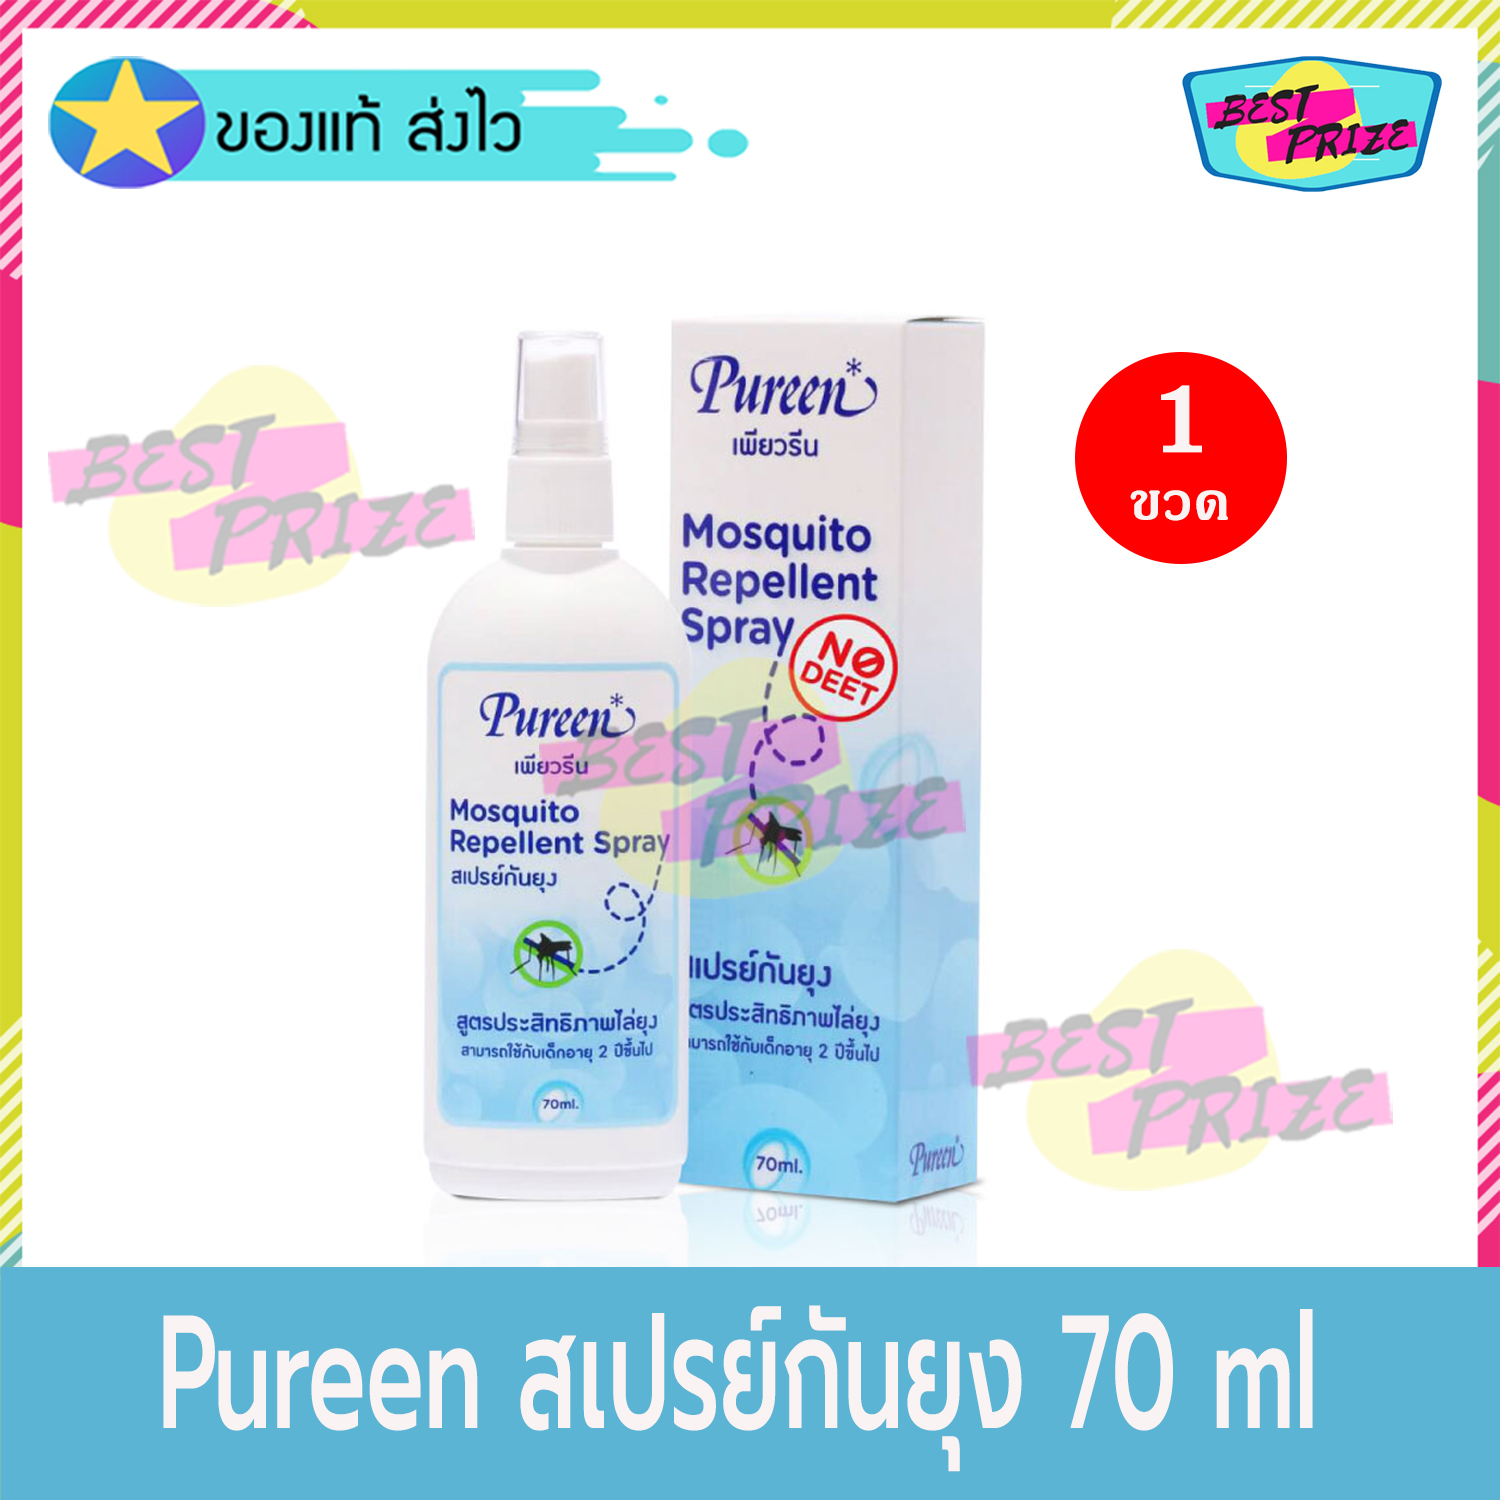 Pureen Mosquito Repellent Spray 70 ml (จำนวน 1 ขวด) เพียวรีน สเปรย์กันยุง สูตรประสิทธิภาพไล่ยุง สำหรับเด็ก 2 ปีขึ้นไป